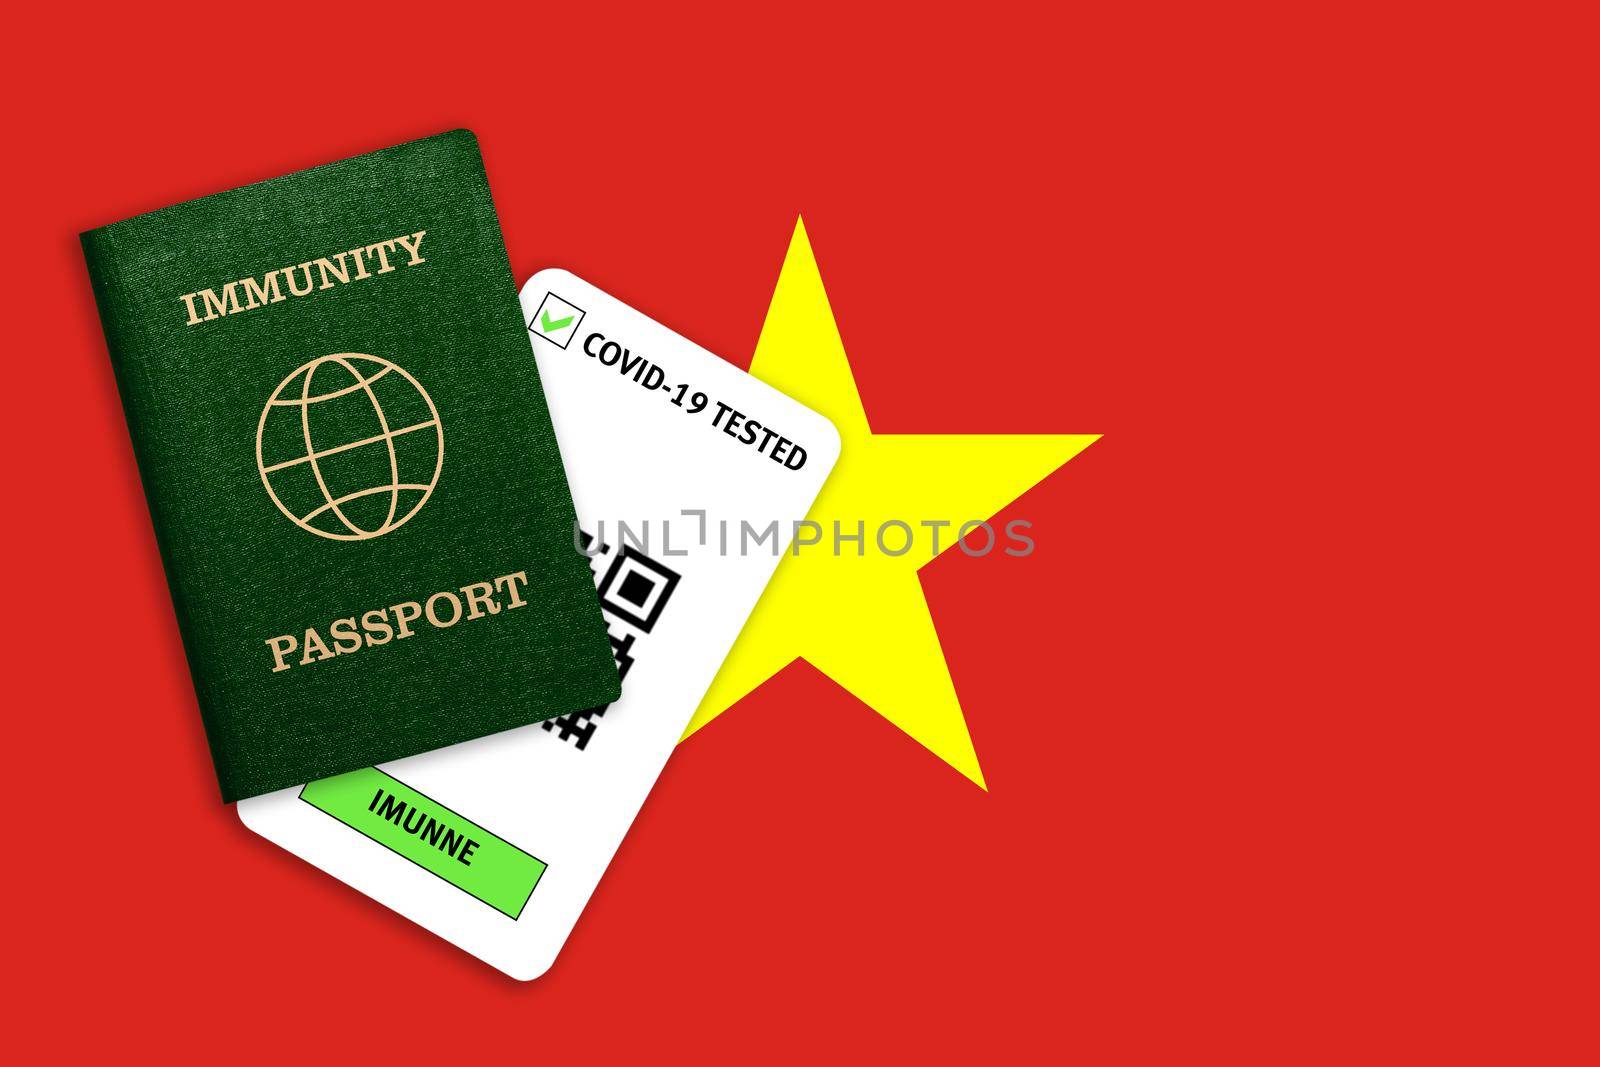 Immunity passport and test result for COVID-19 on flag of Vietnam by galinasharapova